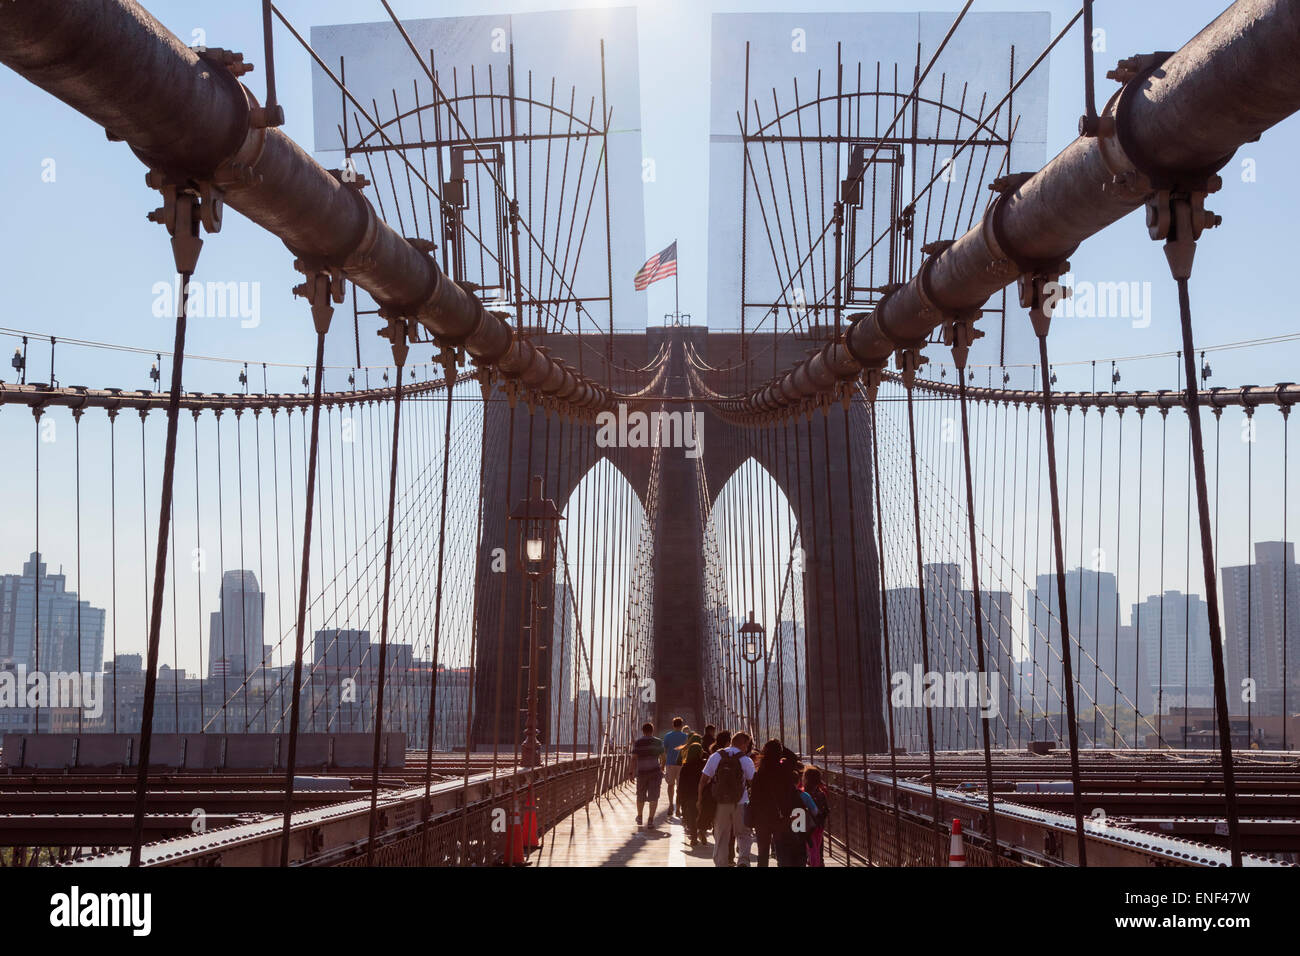 New York, New York State, United States of America.  People walking across Brooklyn Bridge towards Brooklyn. Stock Photo